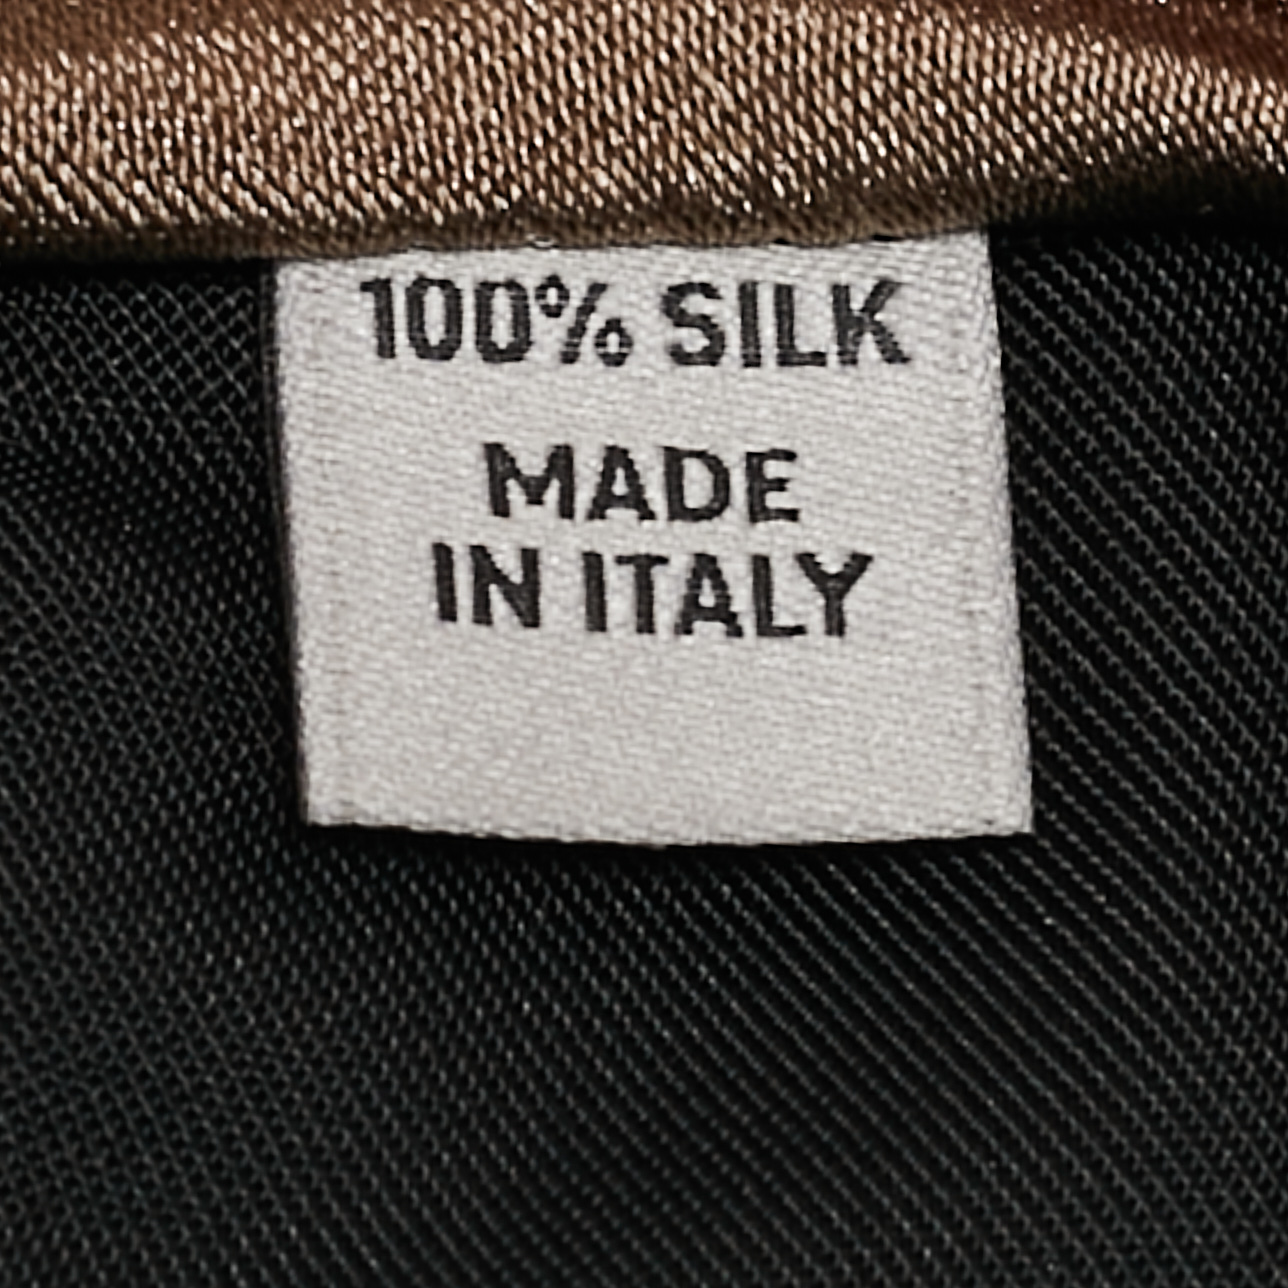 Valentino Light Brown Silk Tie